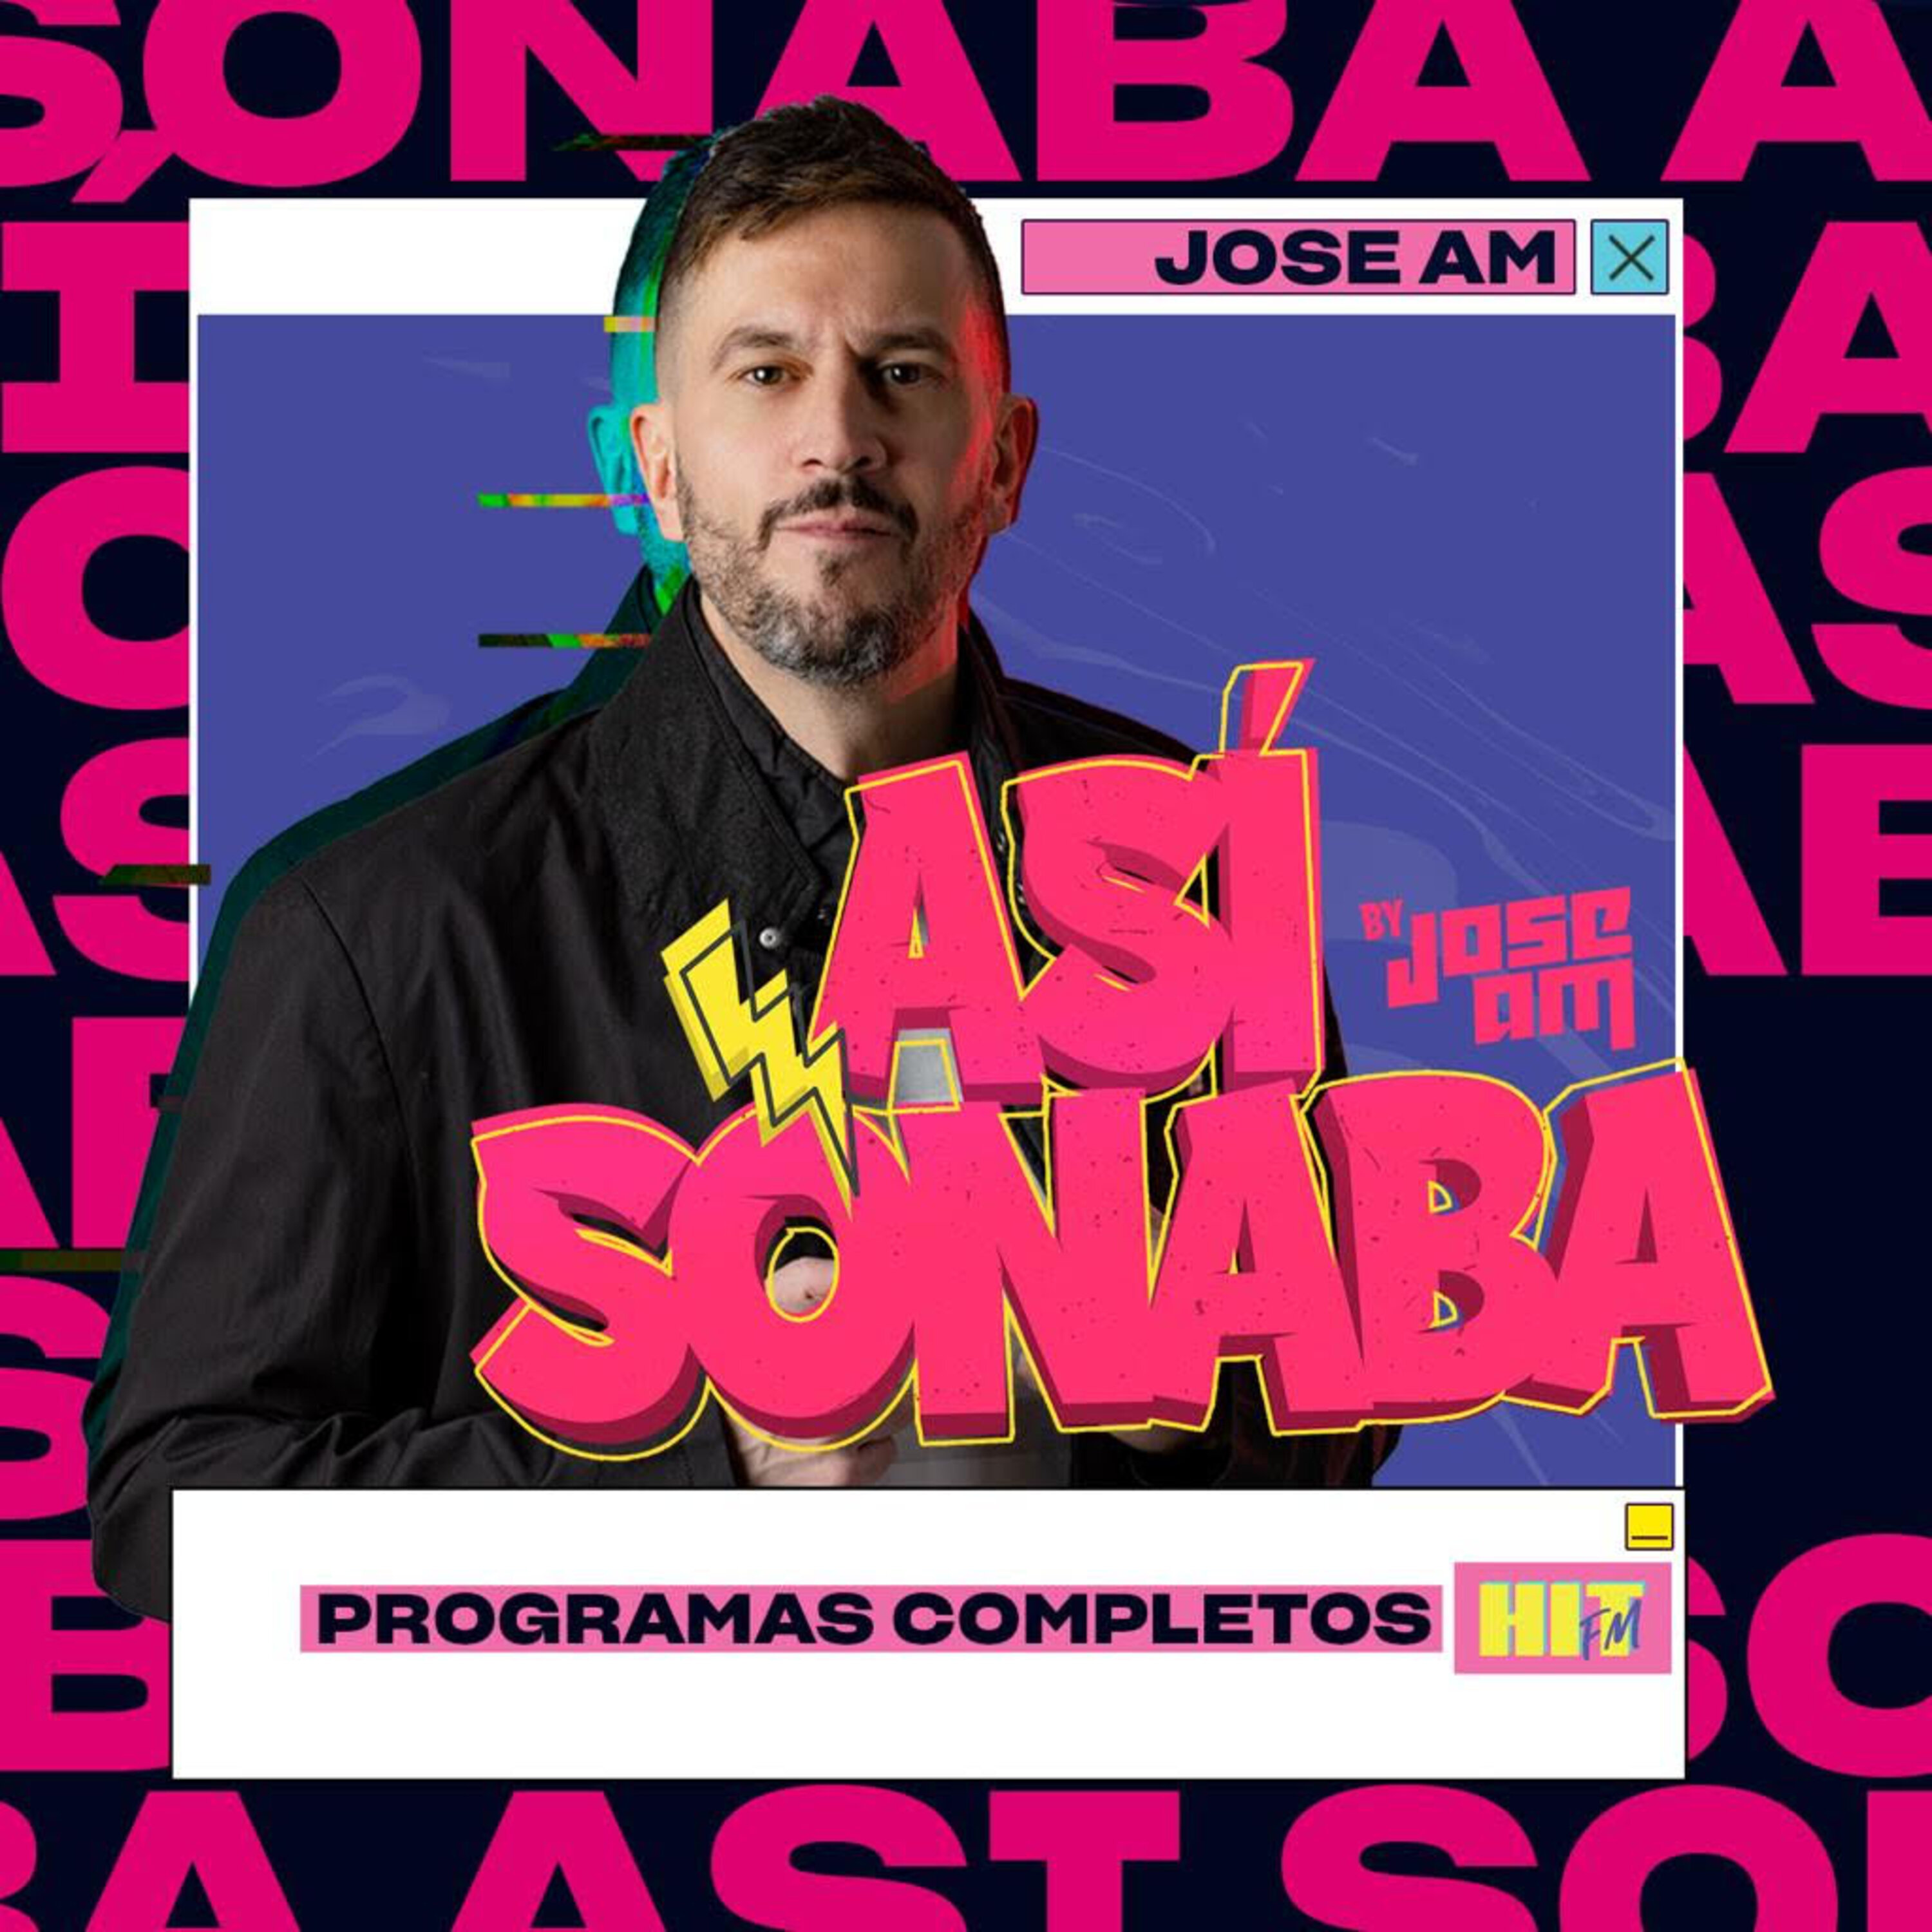 Así Sonaba by Jose AM EP 041